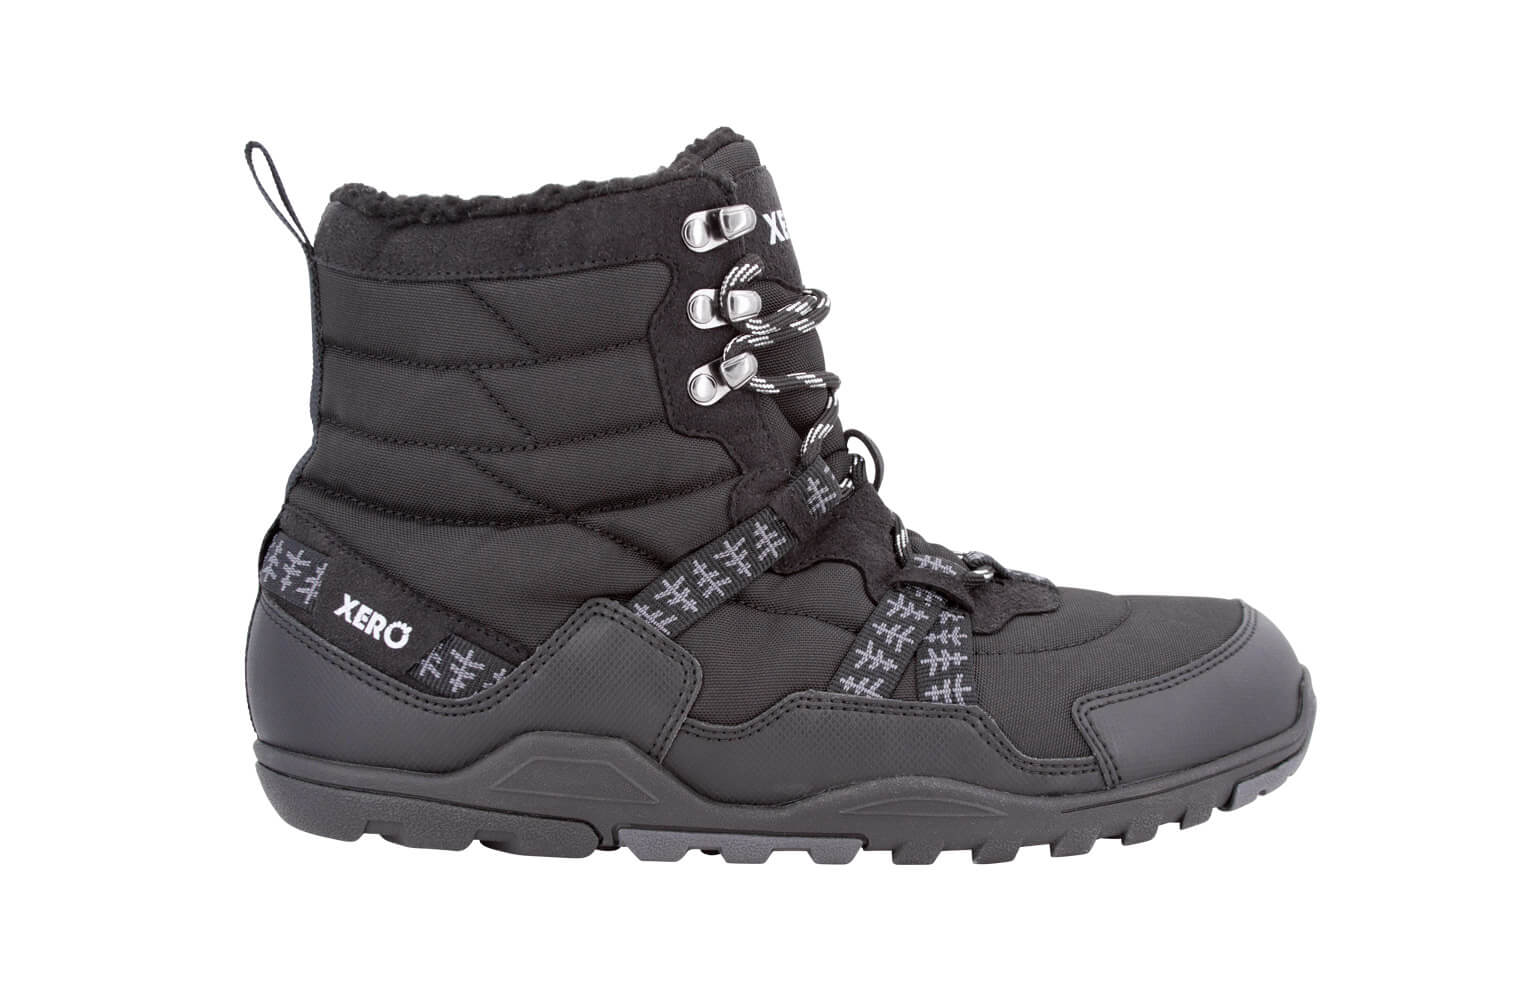 Alpine - Men's Minimalist Barefoot-inspired Snow Boot by Xero Shoes